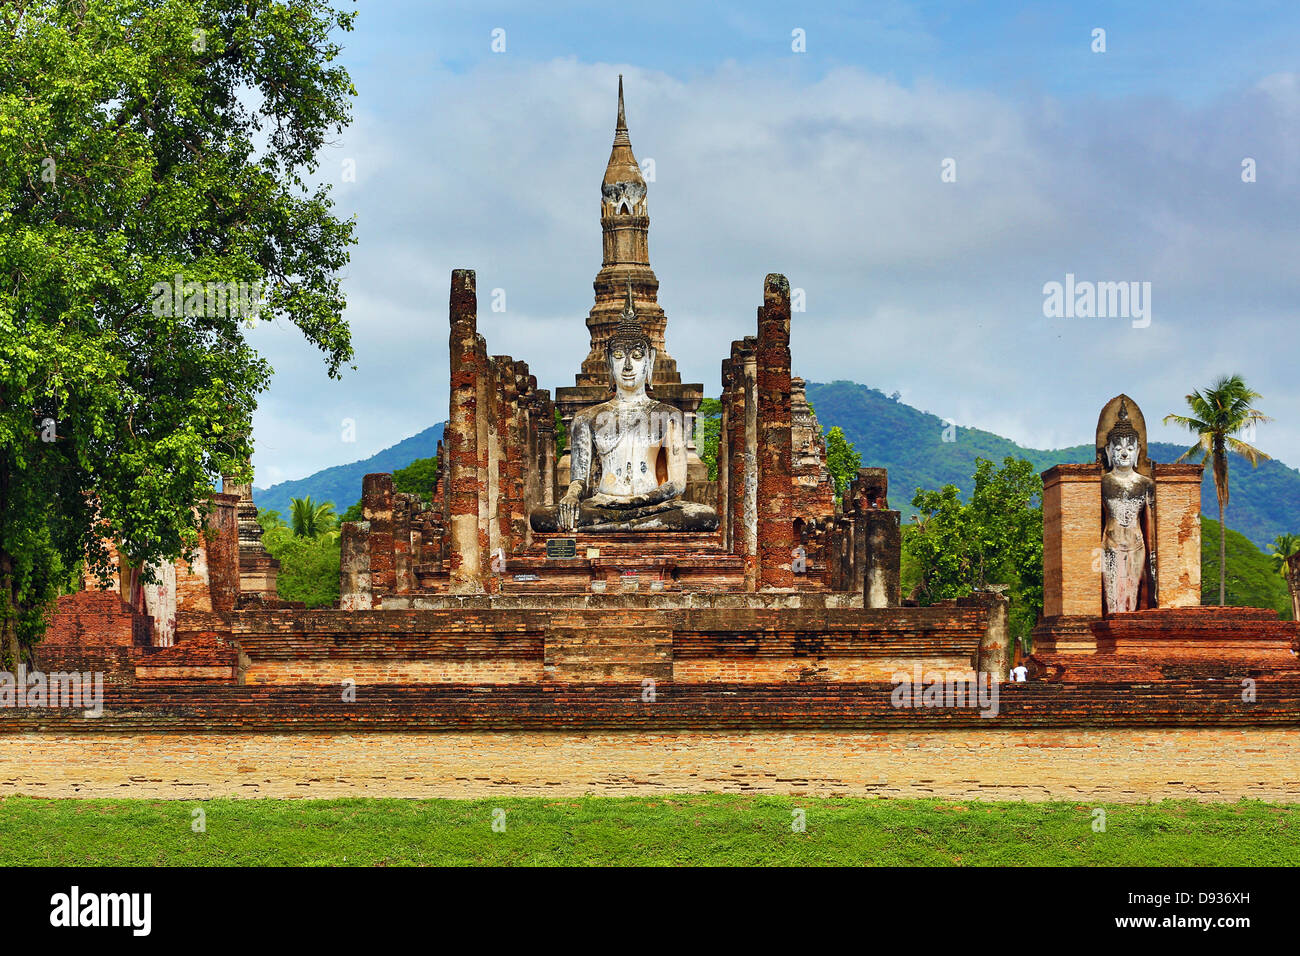 Wat Mahathat temple, Sukhotai Historical Park, Sukhotai, Thailand Stock Photo